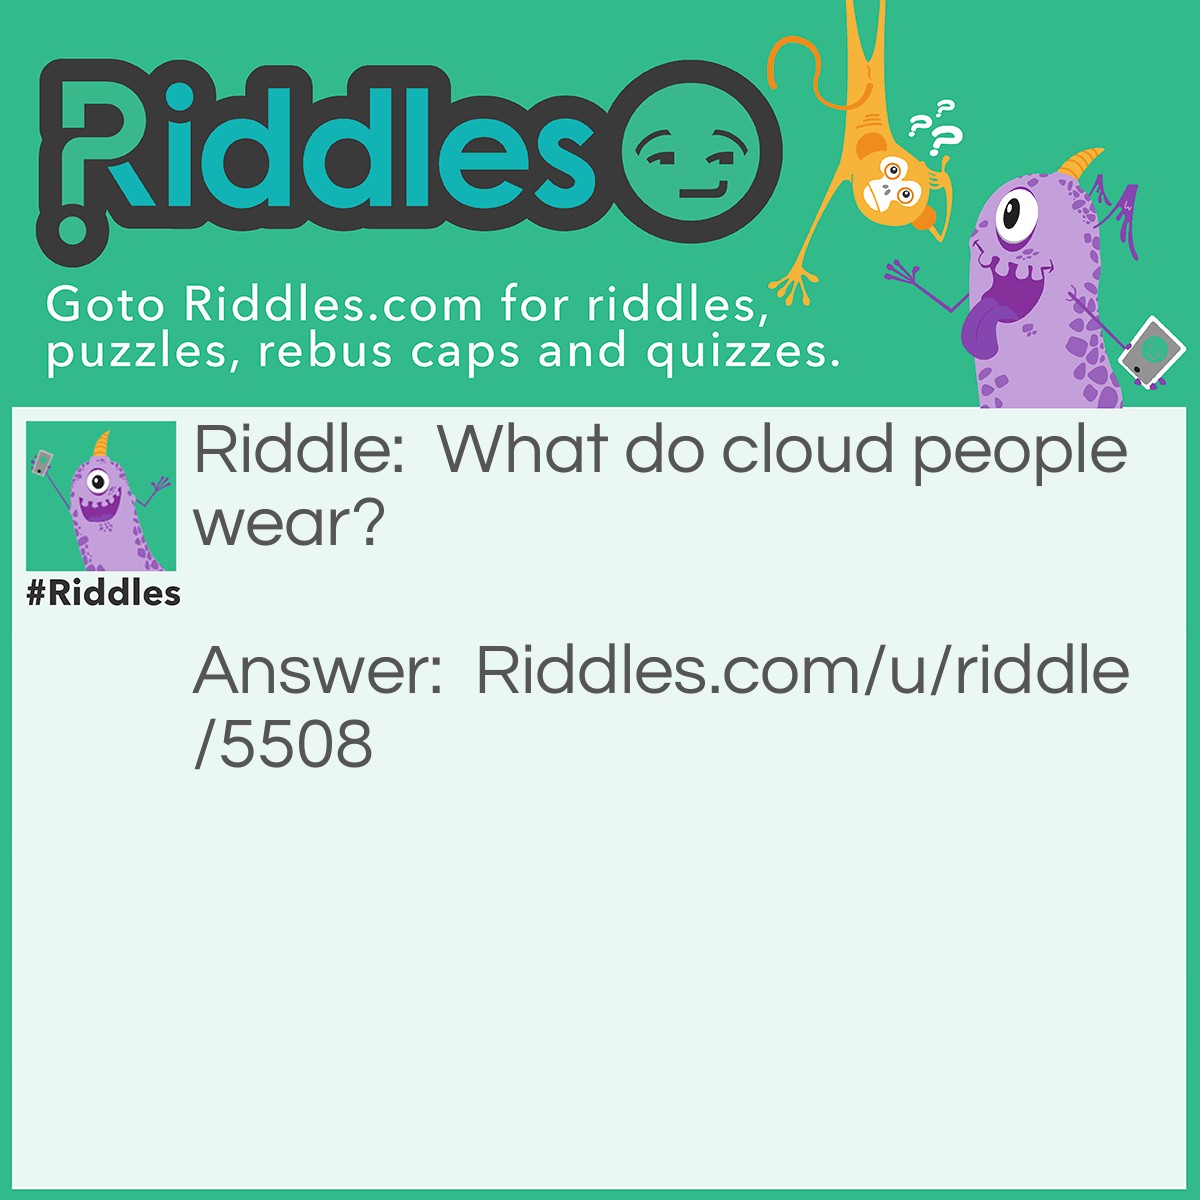 Riddle: What do cloud people wear? Answer: Thunderwear (Underwear)